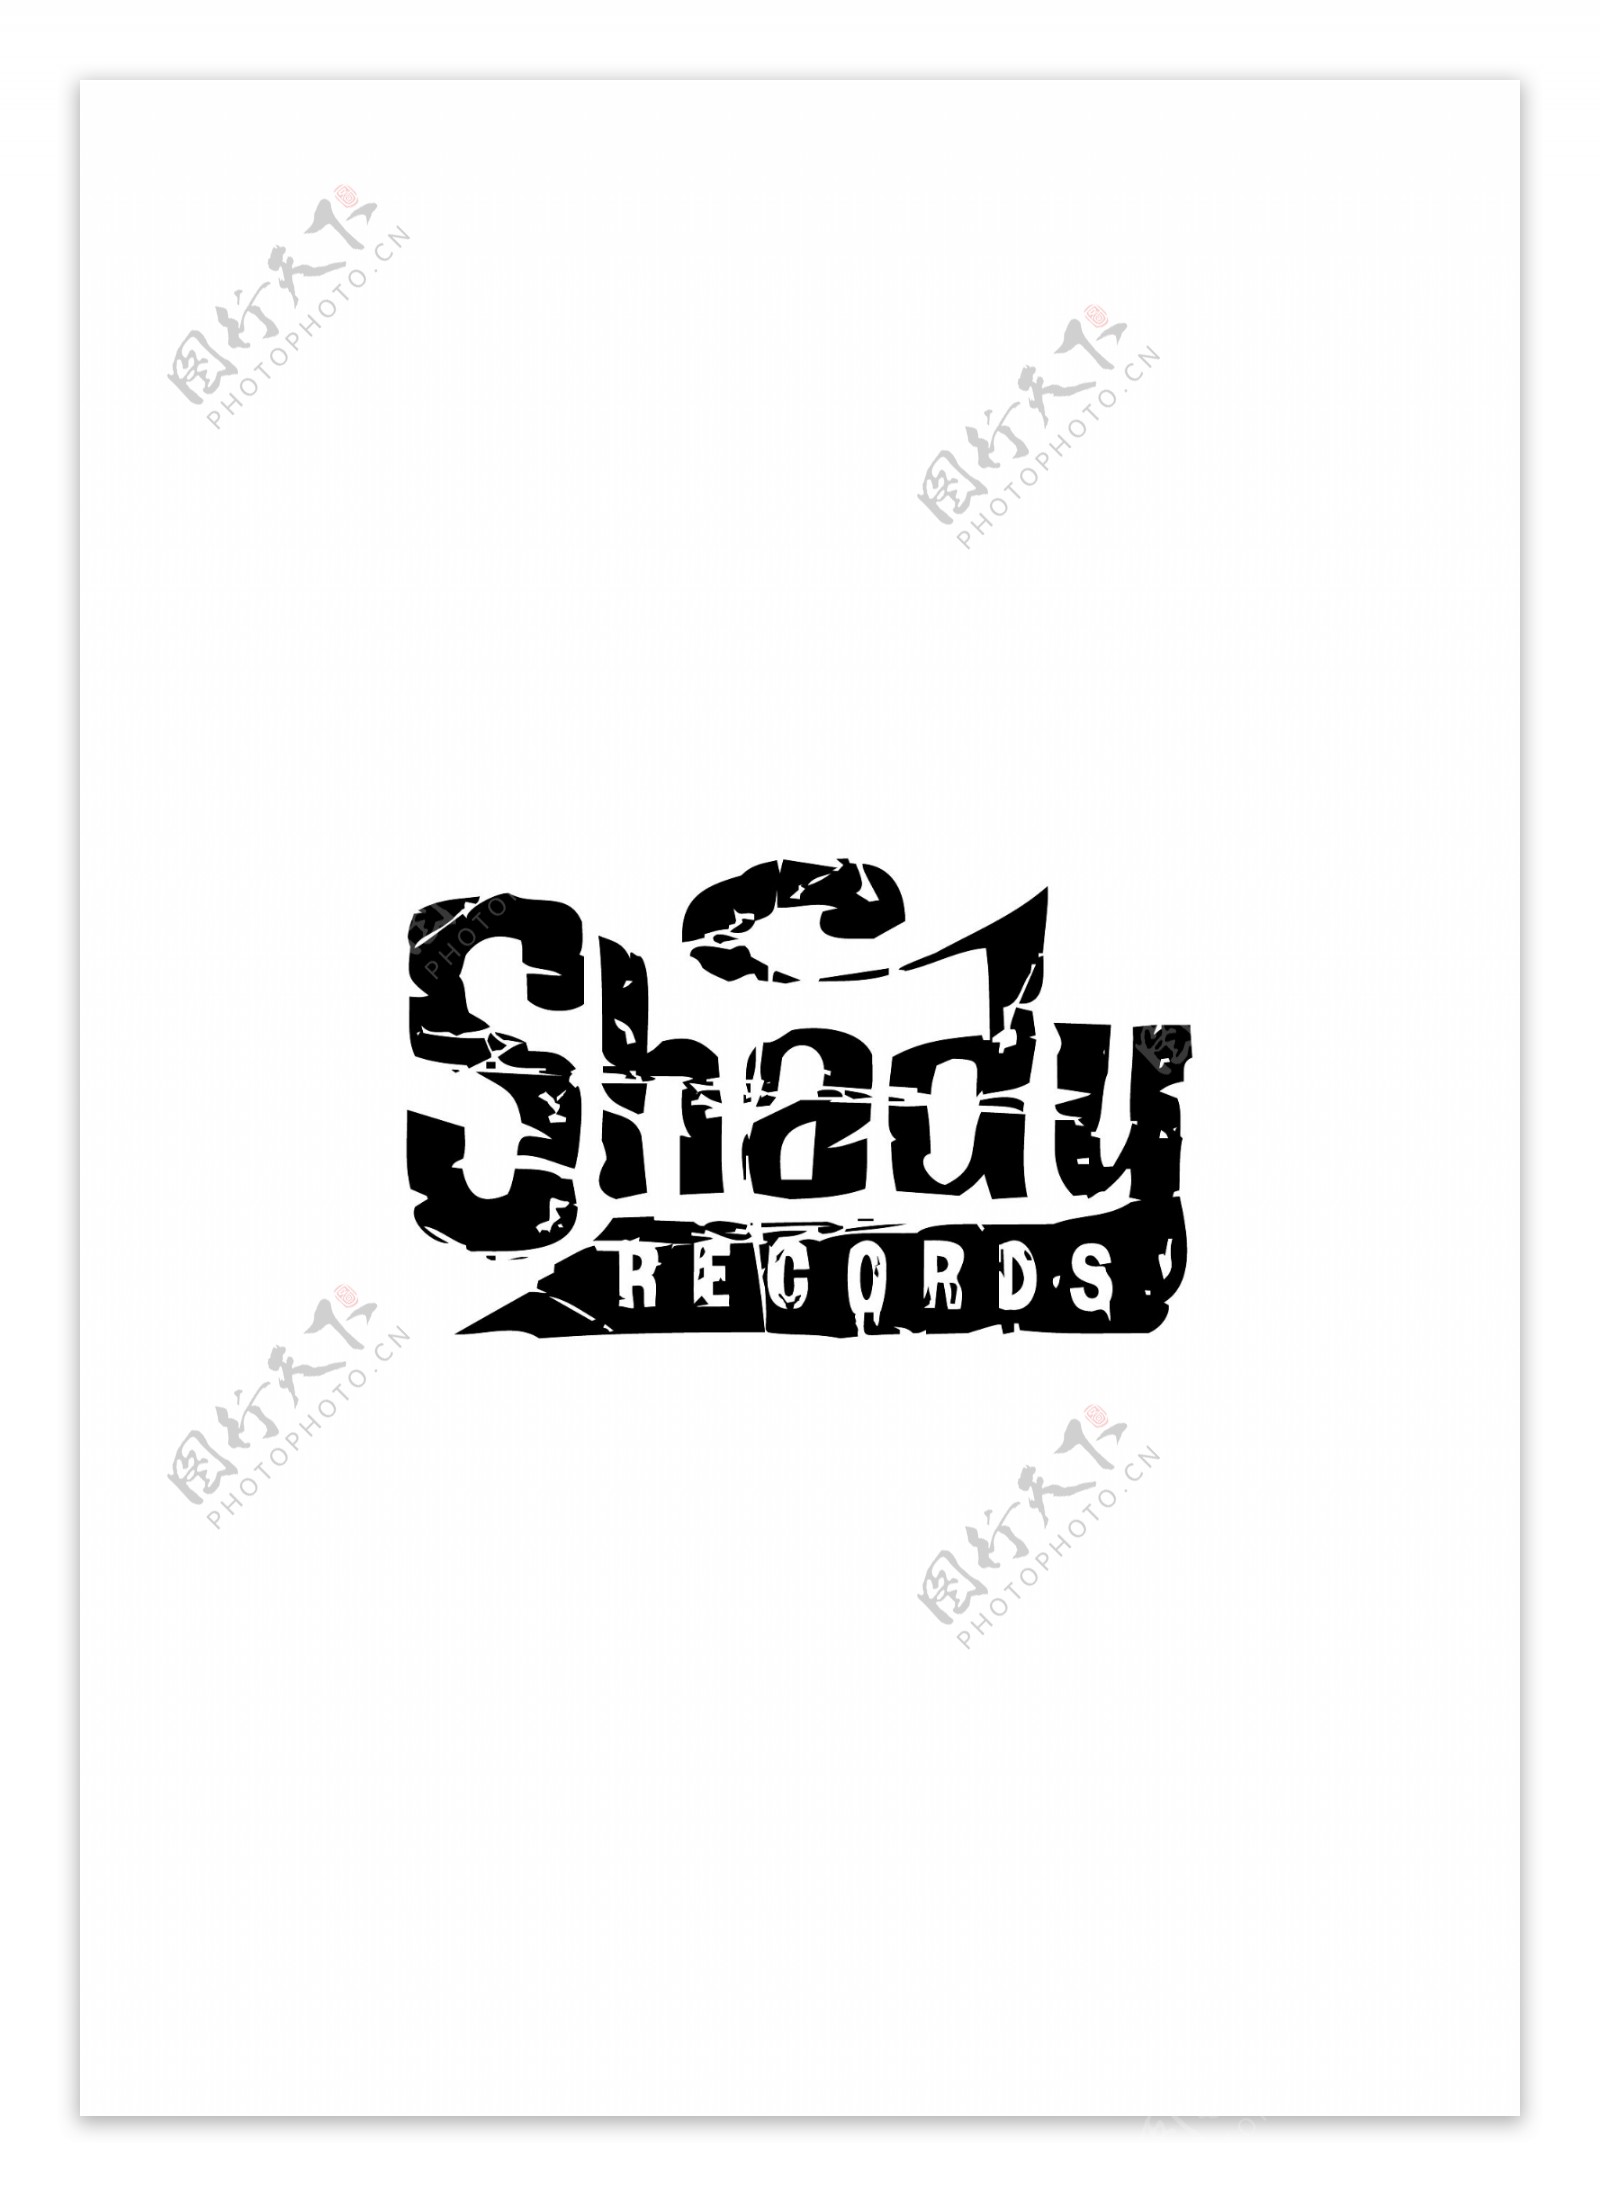 ShadyRecordslogo设计欣赏ShadyRecords唱片公司LOGO下载标志设计欣赏